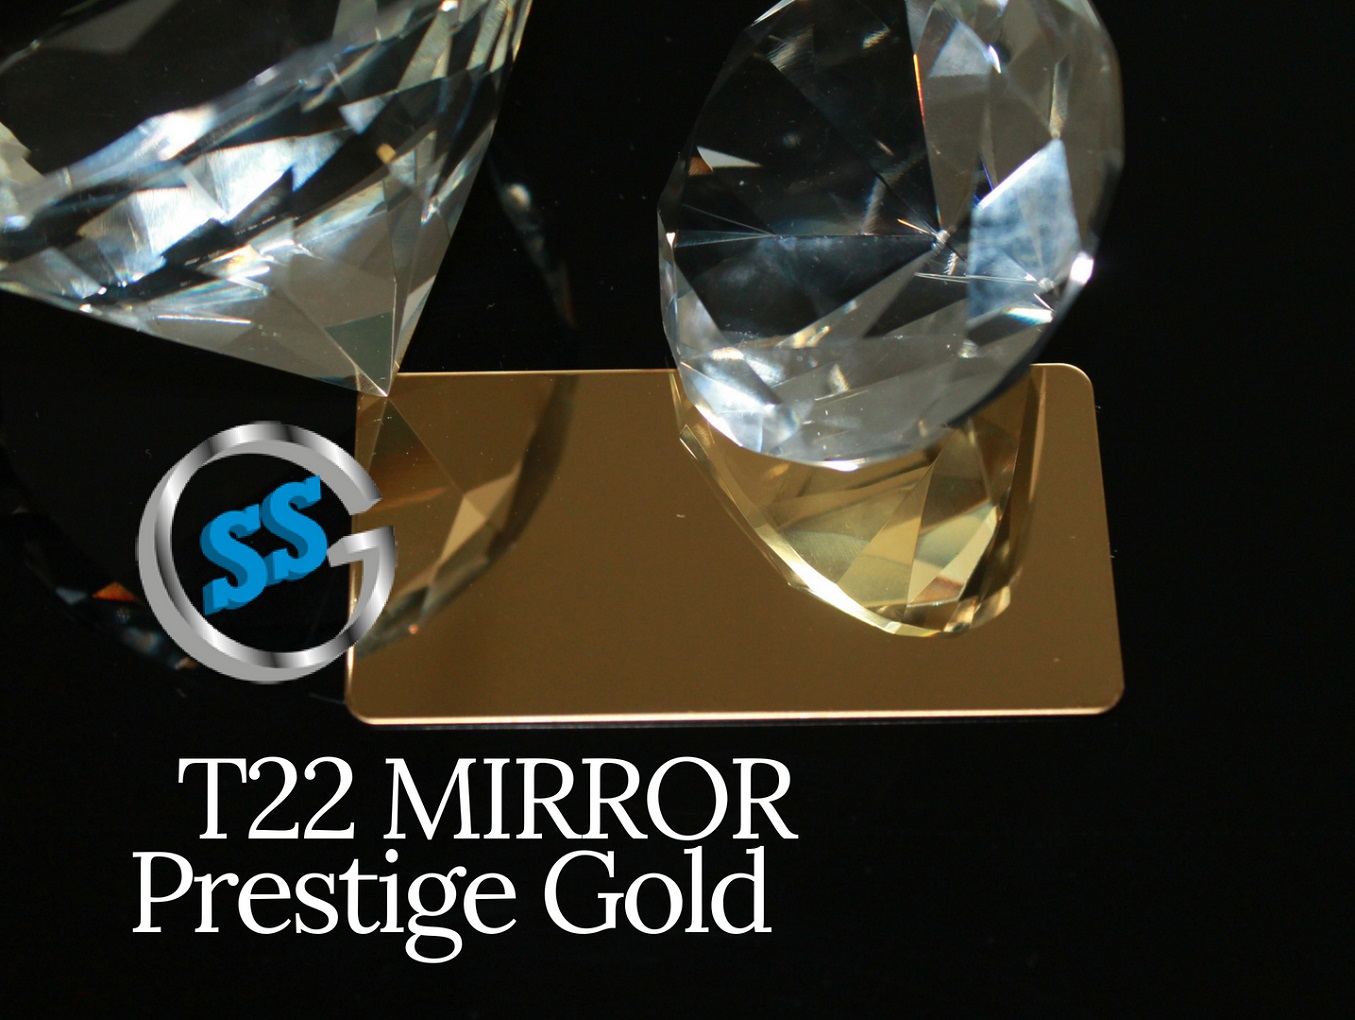 T22 MIRROR PRESTIGE GOLD GALLERY 1